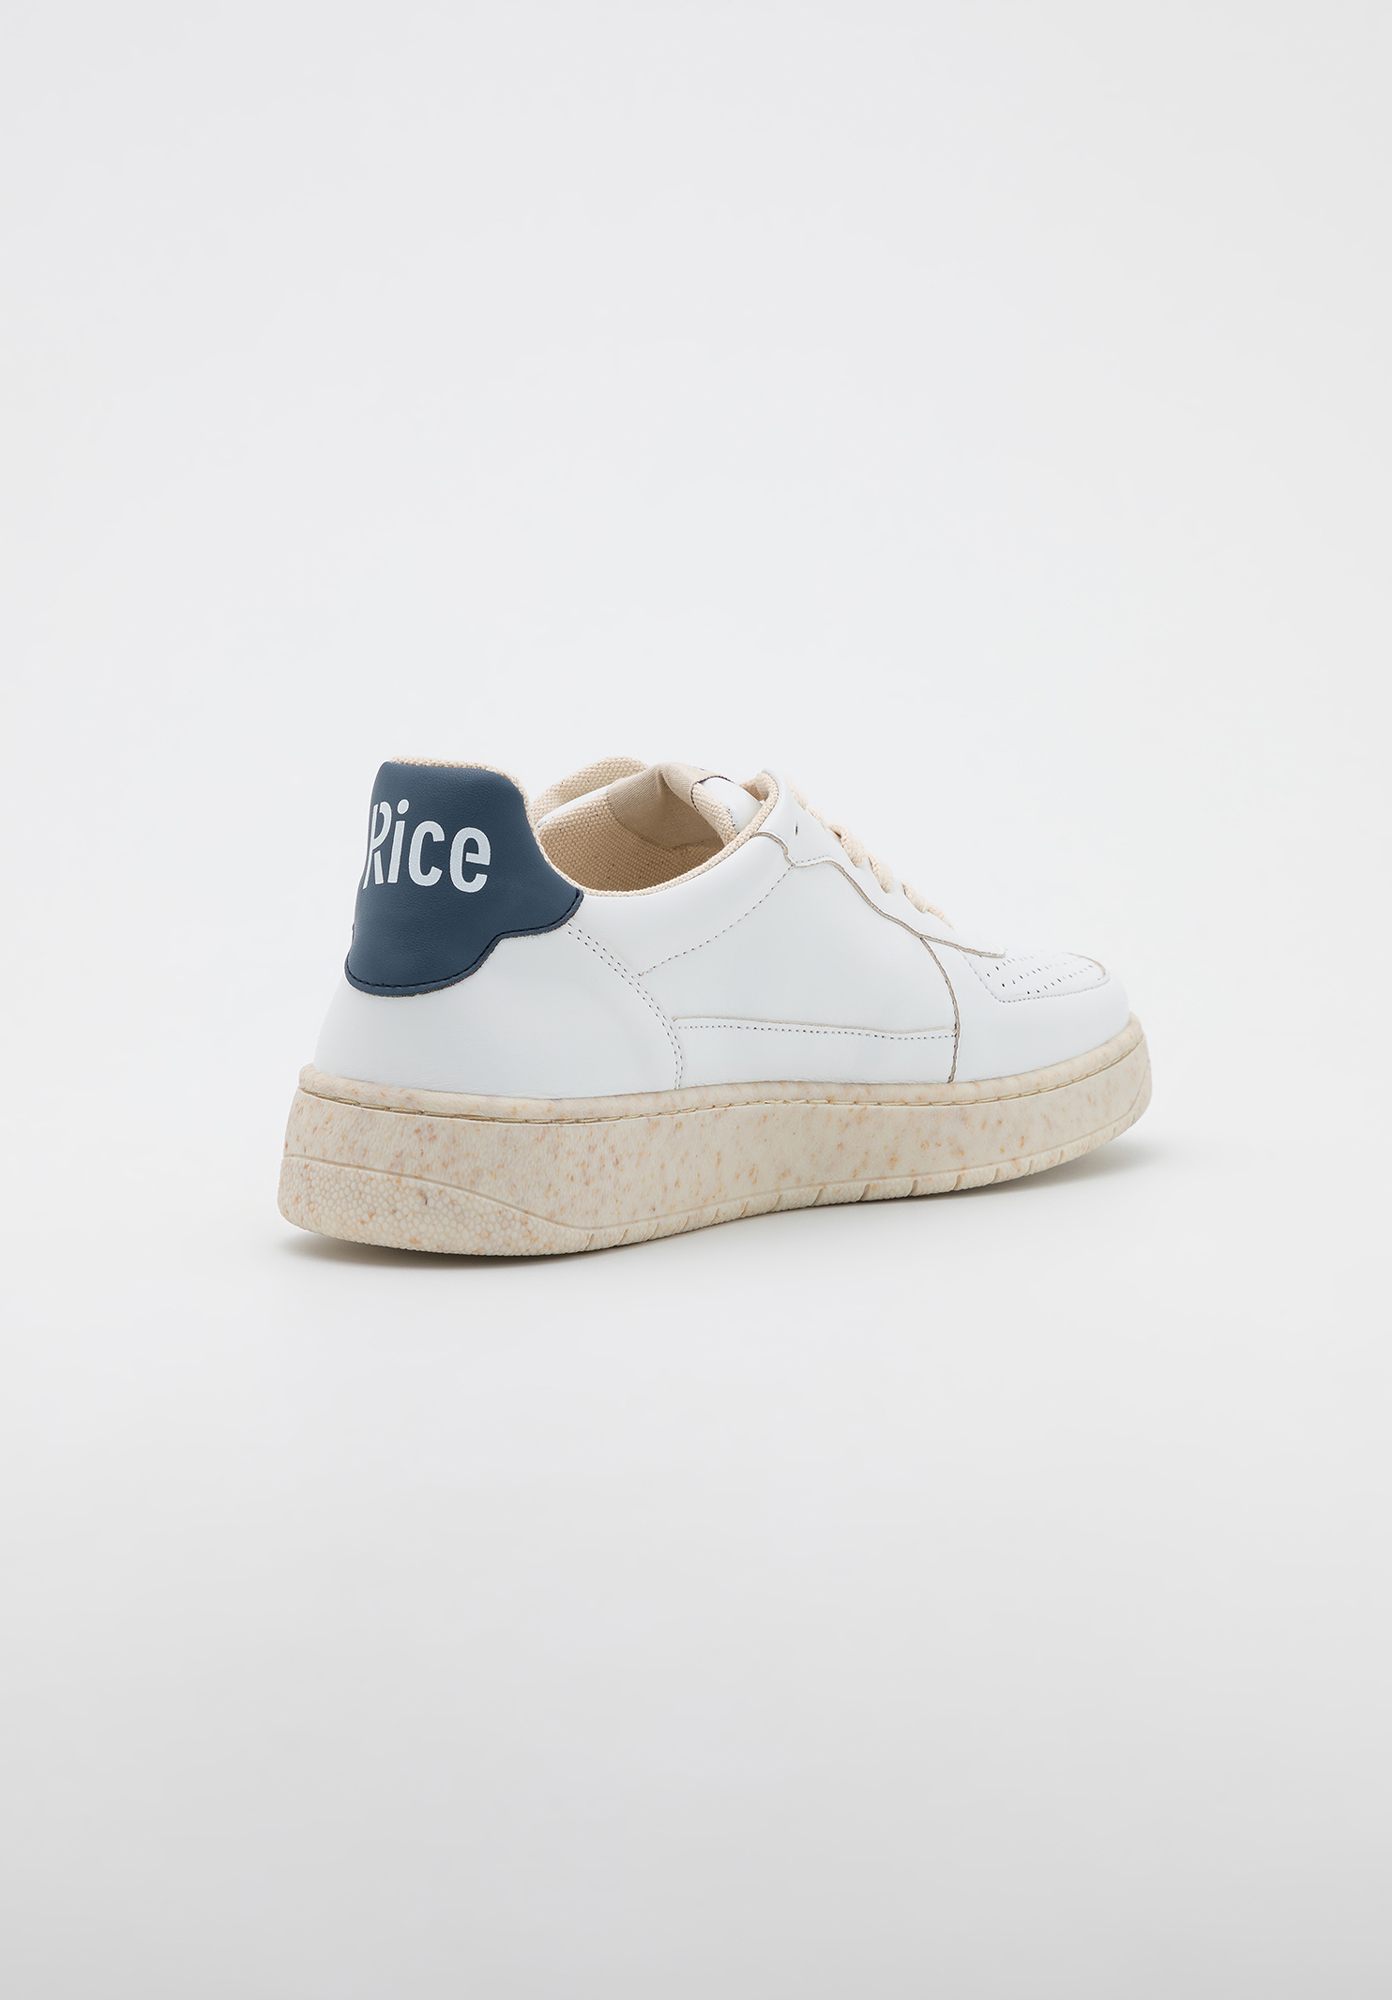 RICE Sneaker Open21 white/blue 41